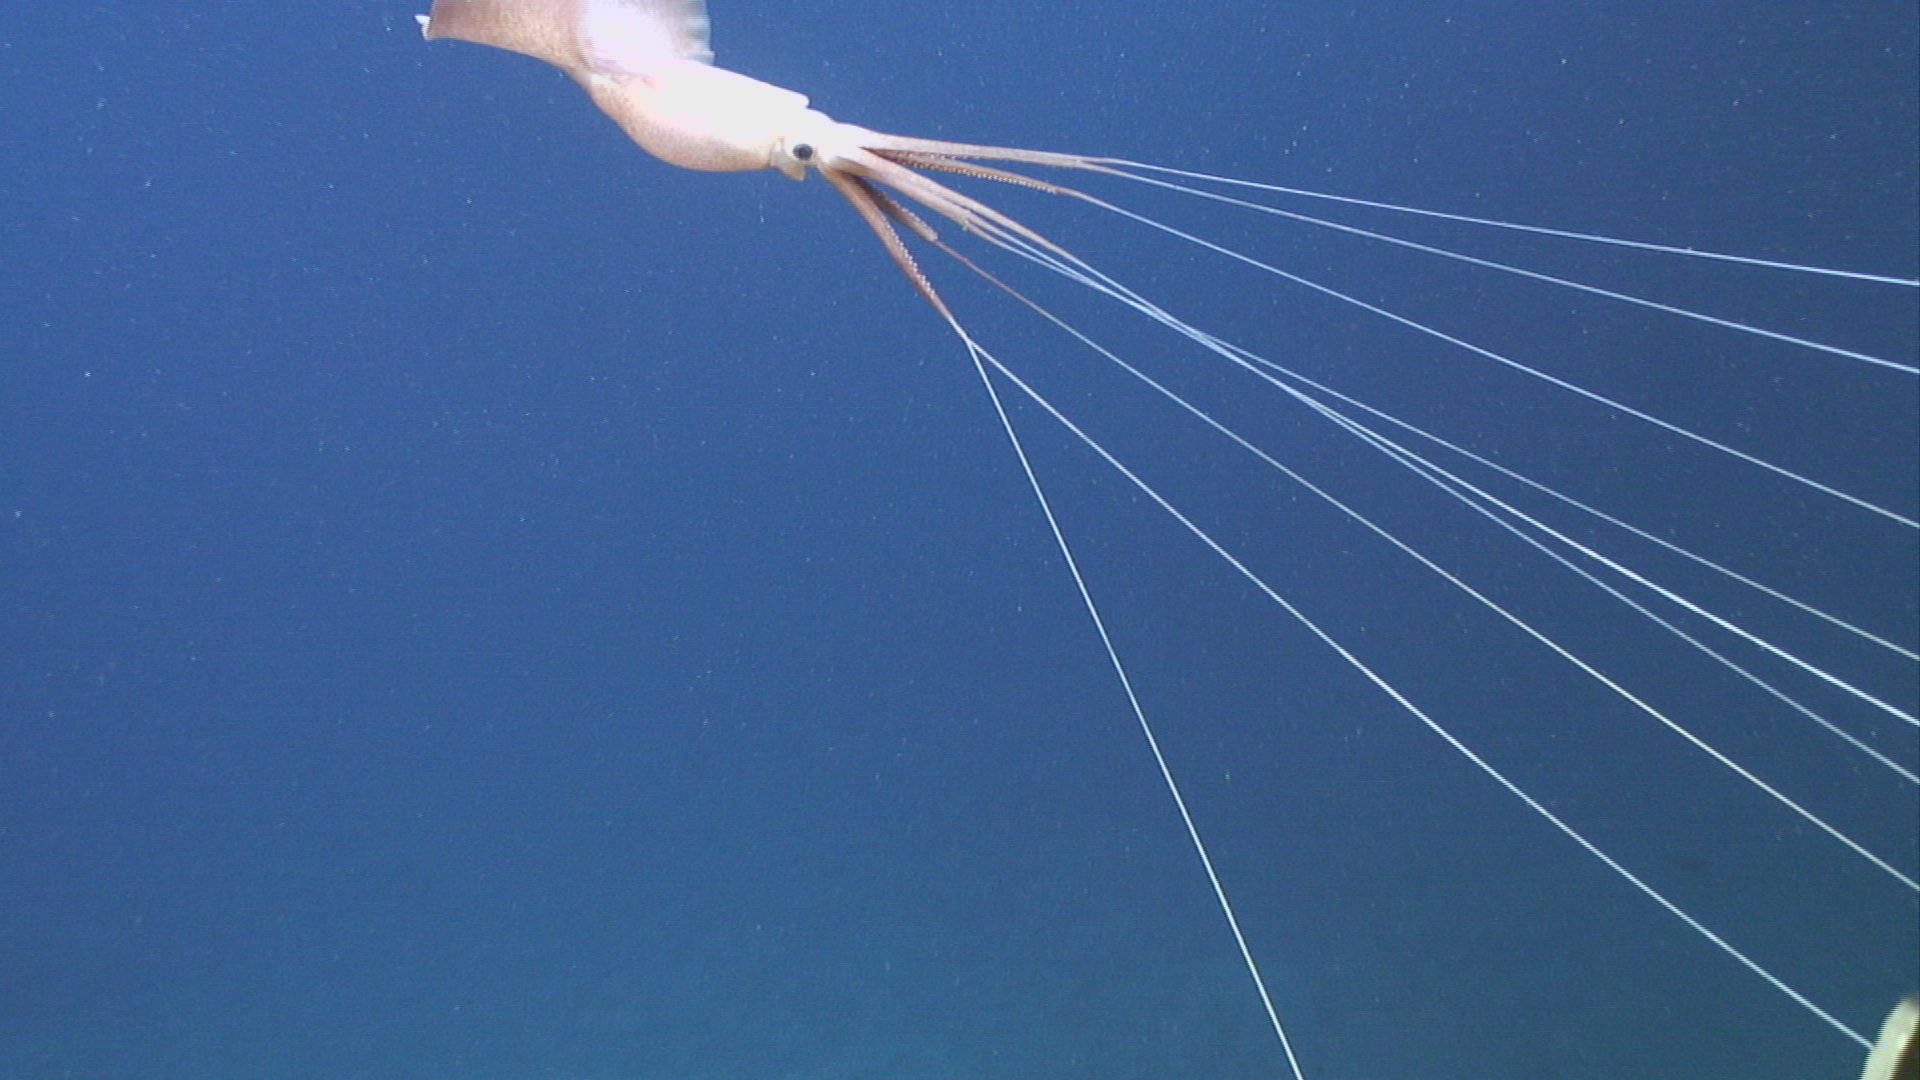 Joubin's Calamari With Long Tentacles Picture